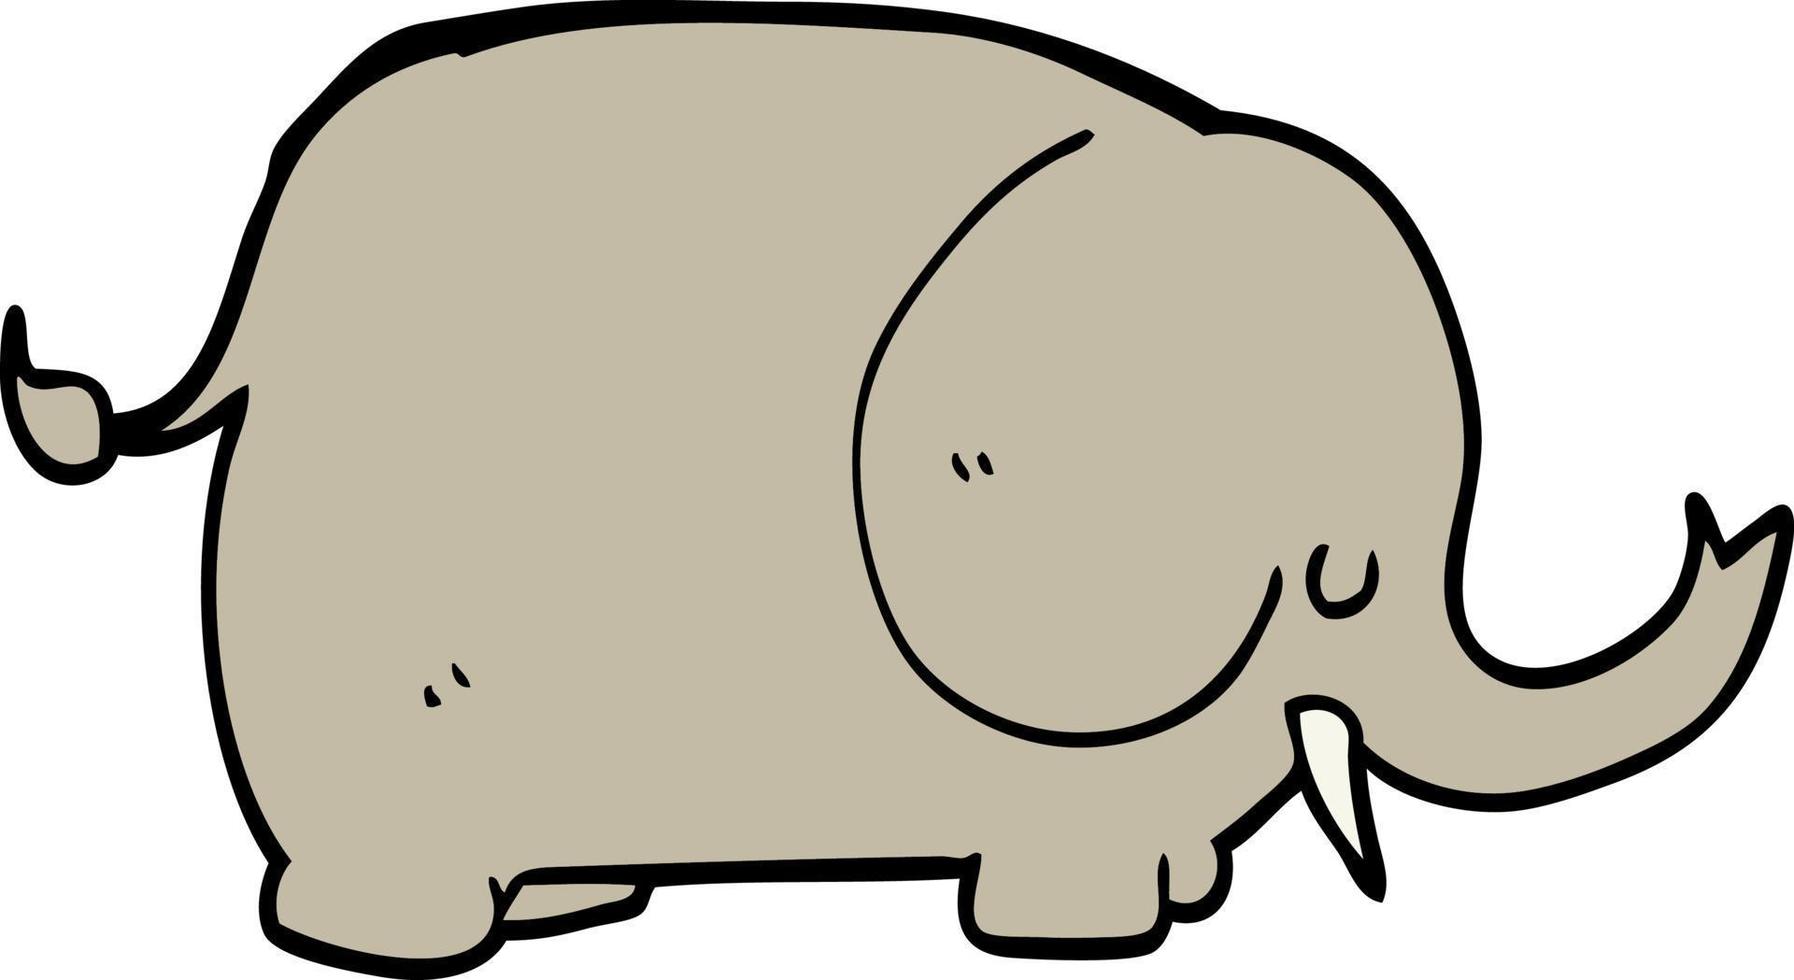 doodle character cartoon elephant vector